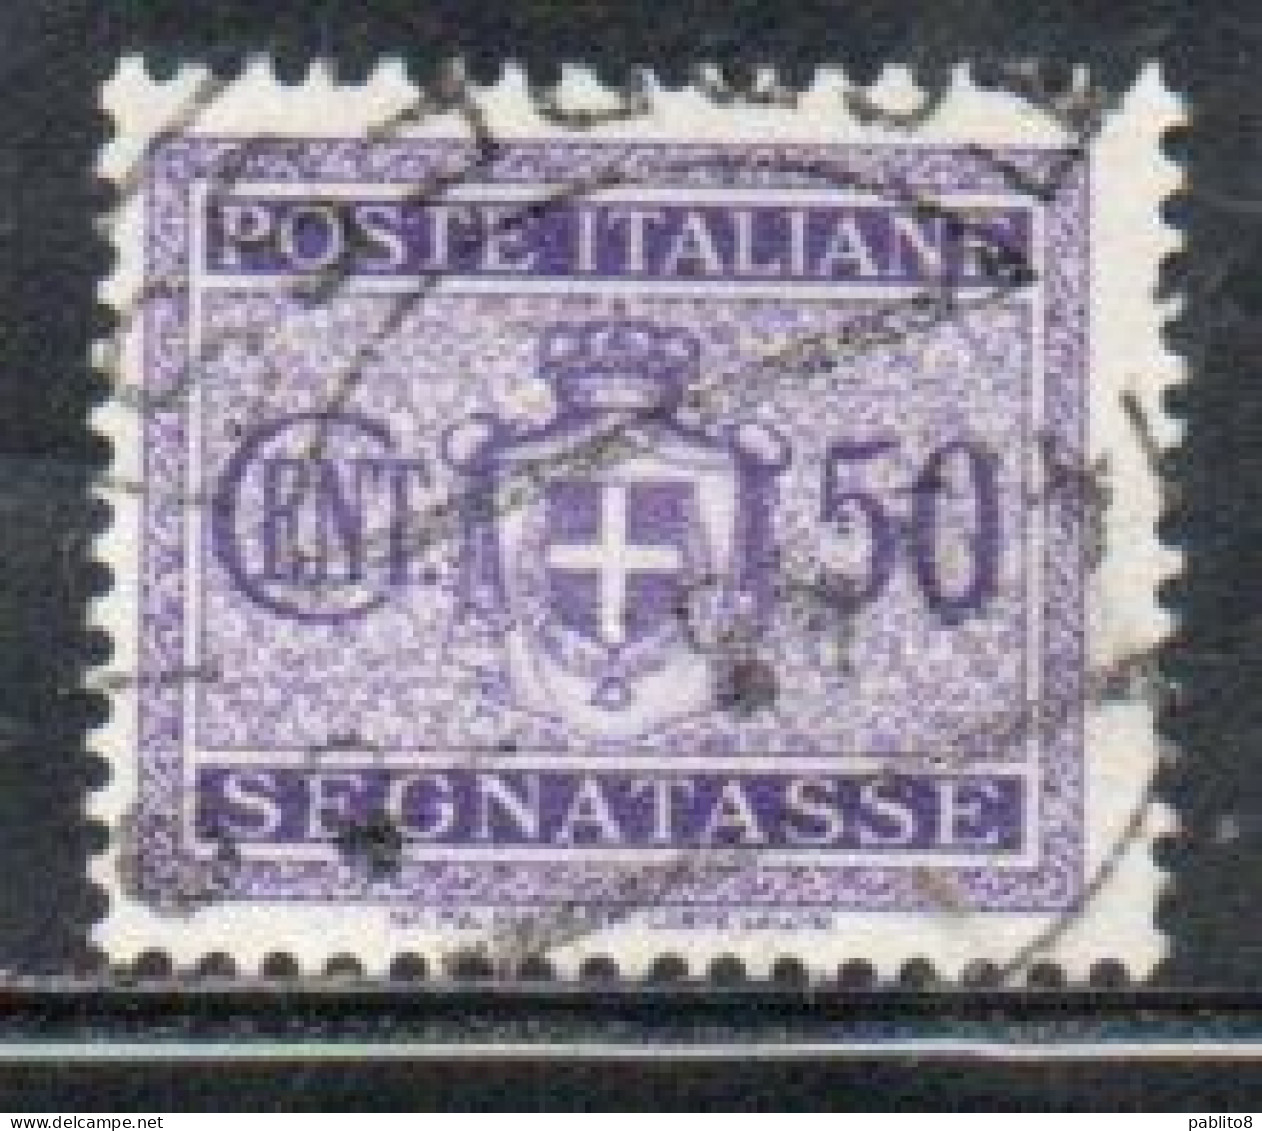 ITALY KINGDOM ITALIA REGNO 1945 LUOGOTENENZA SEGNATASSE POSTAGE DUE TASSE SENZA FILIGRANA CENT. 50c USATO USED OBLITERE' - Postage Due